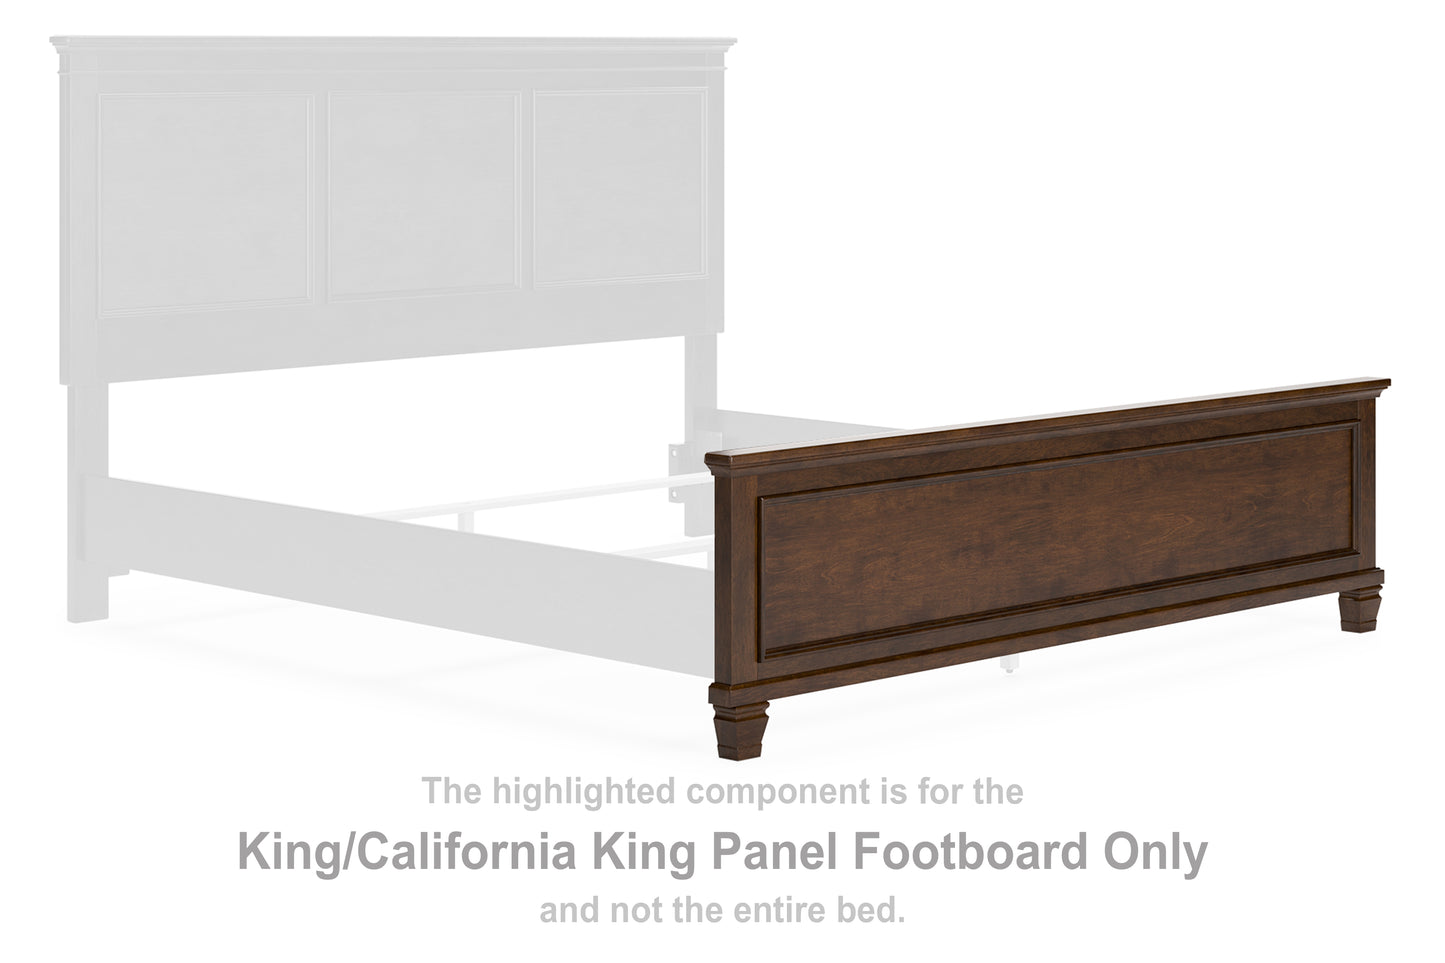 Danabrin King/California King Panel Footboard